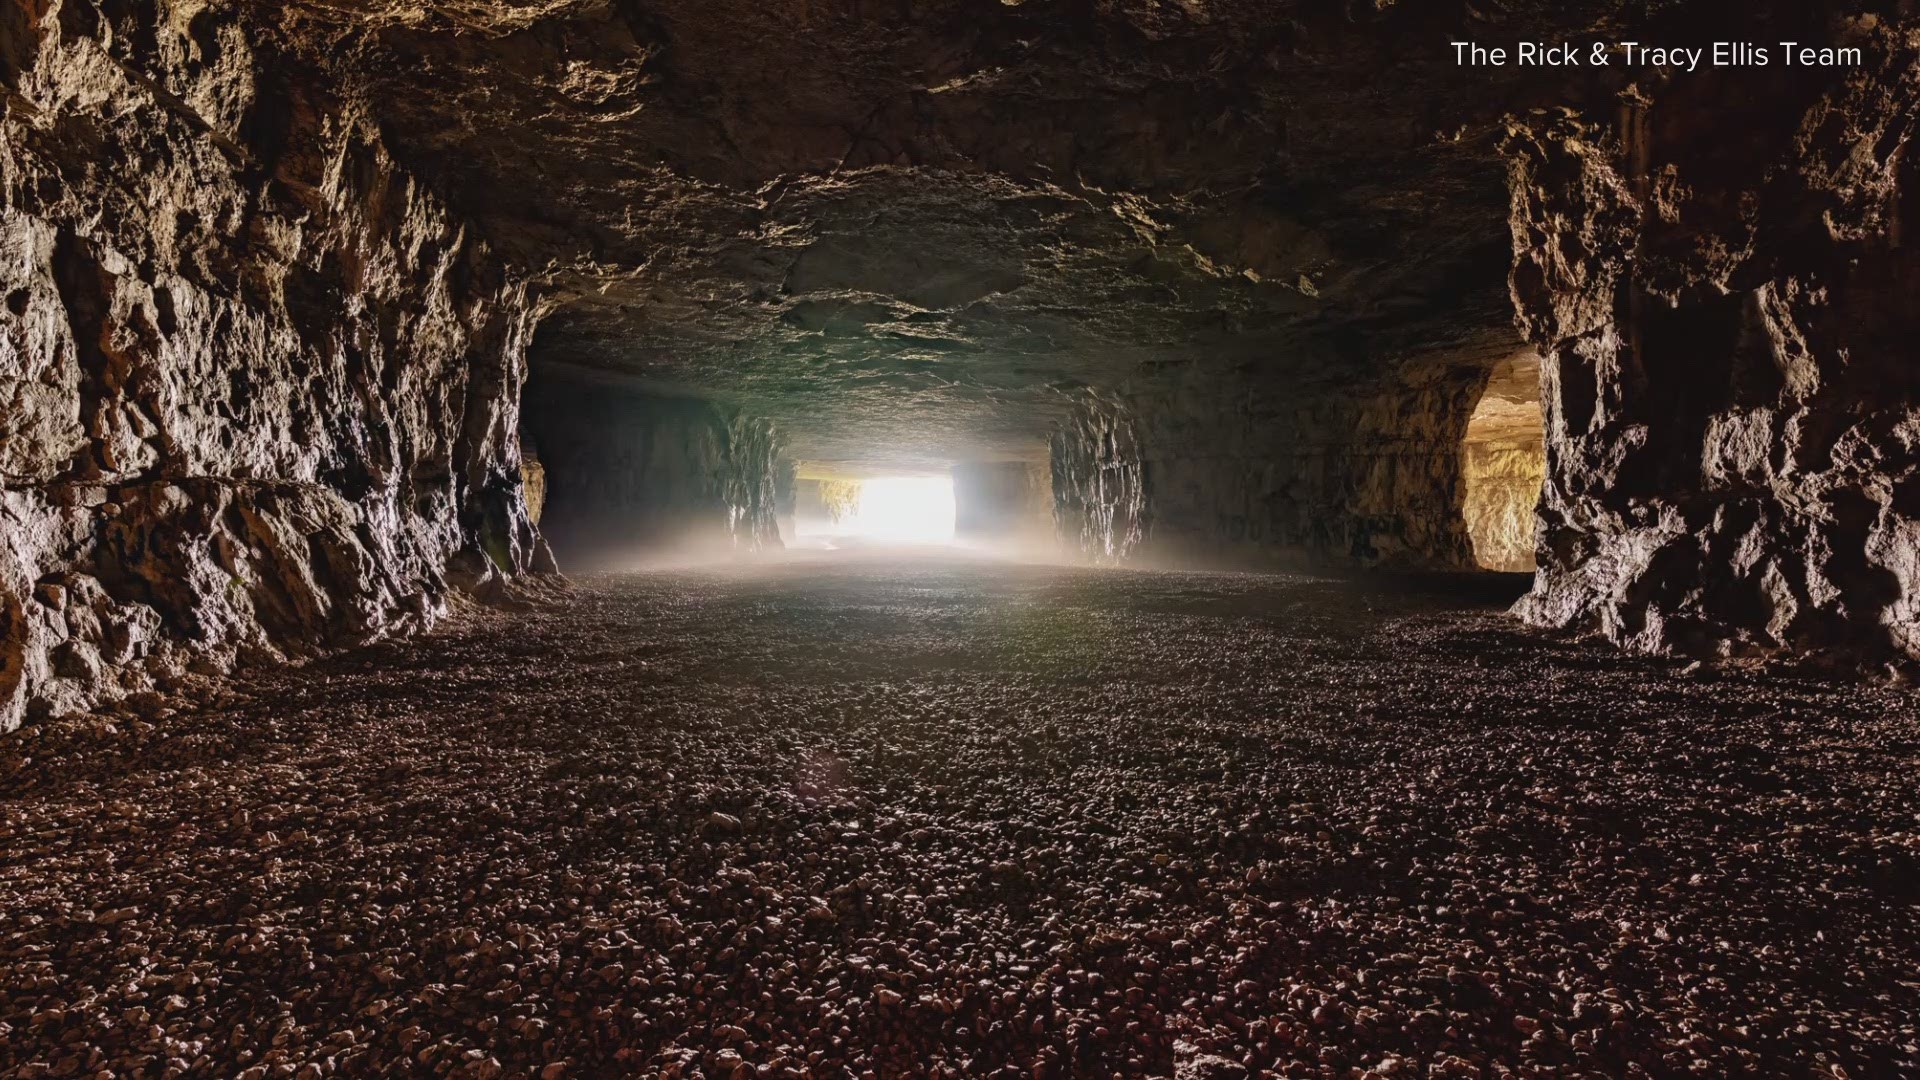 The Trinity Underground mine system sits on 40 acres in Elsberry, Missouri